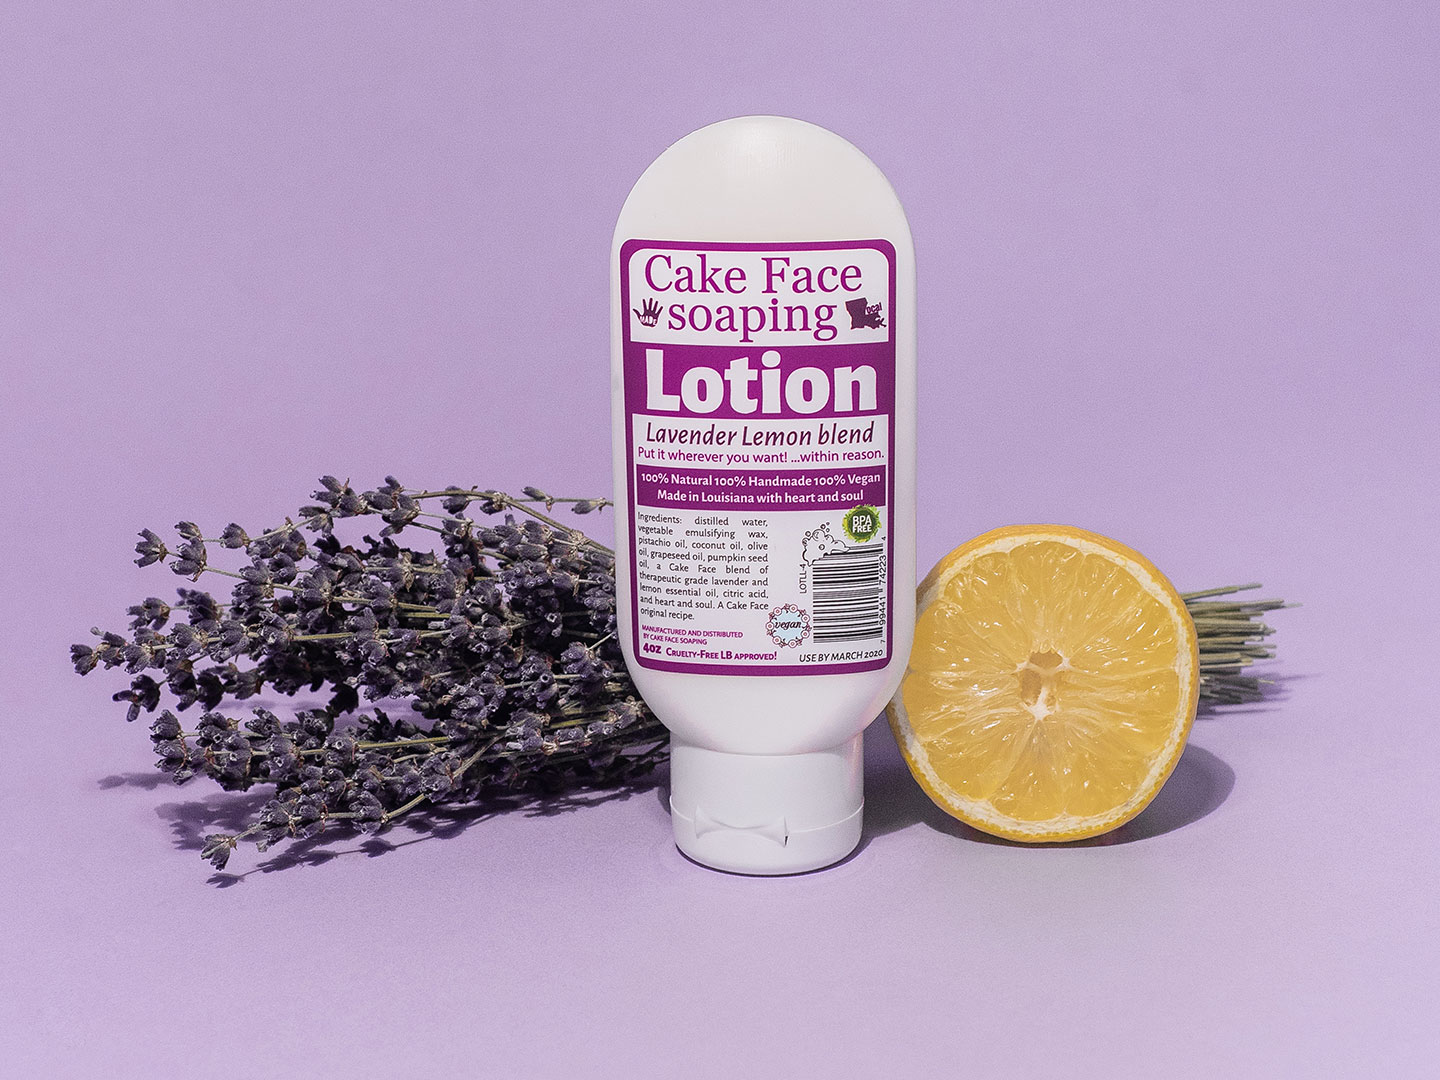 Cake Face Soaping Lavender Lemon Lotion